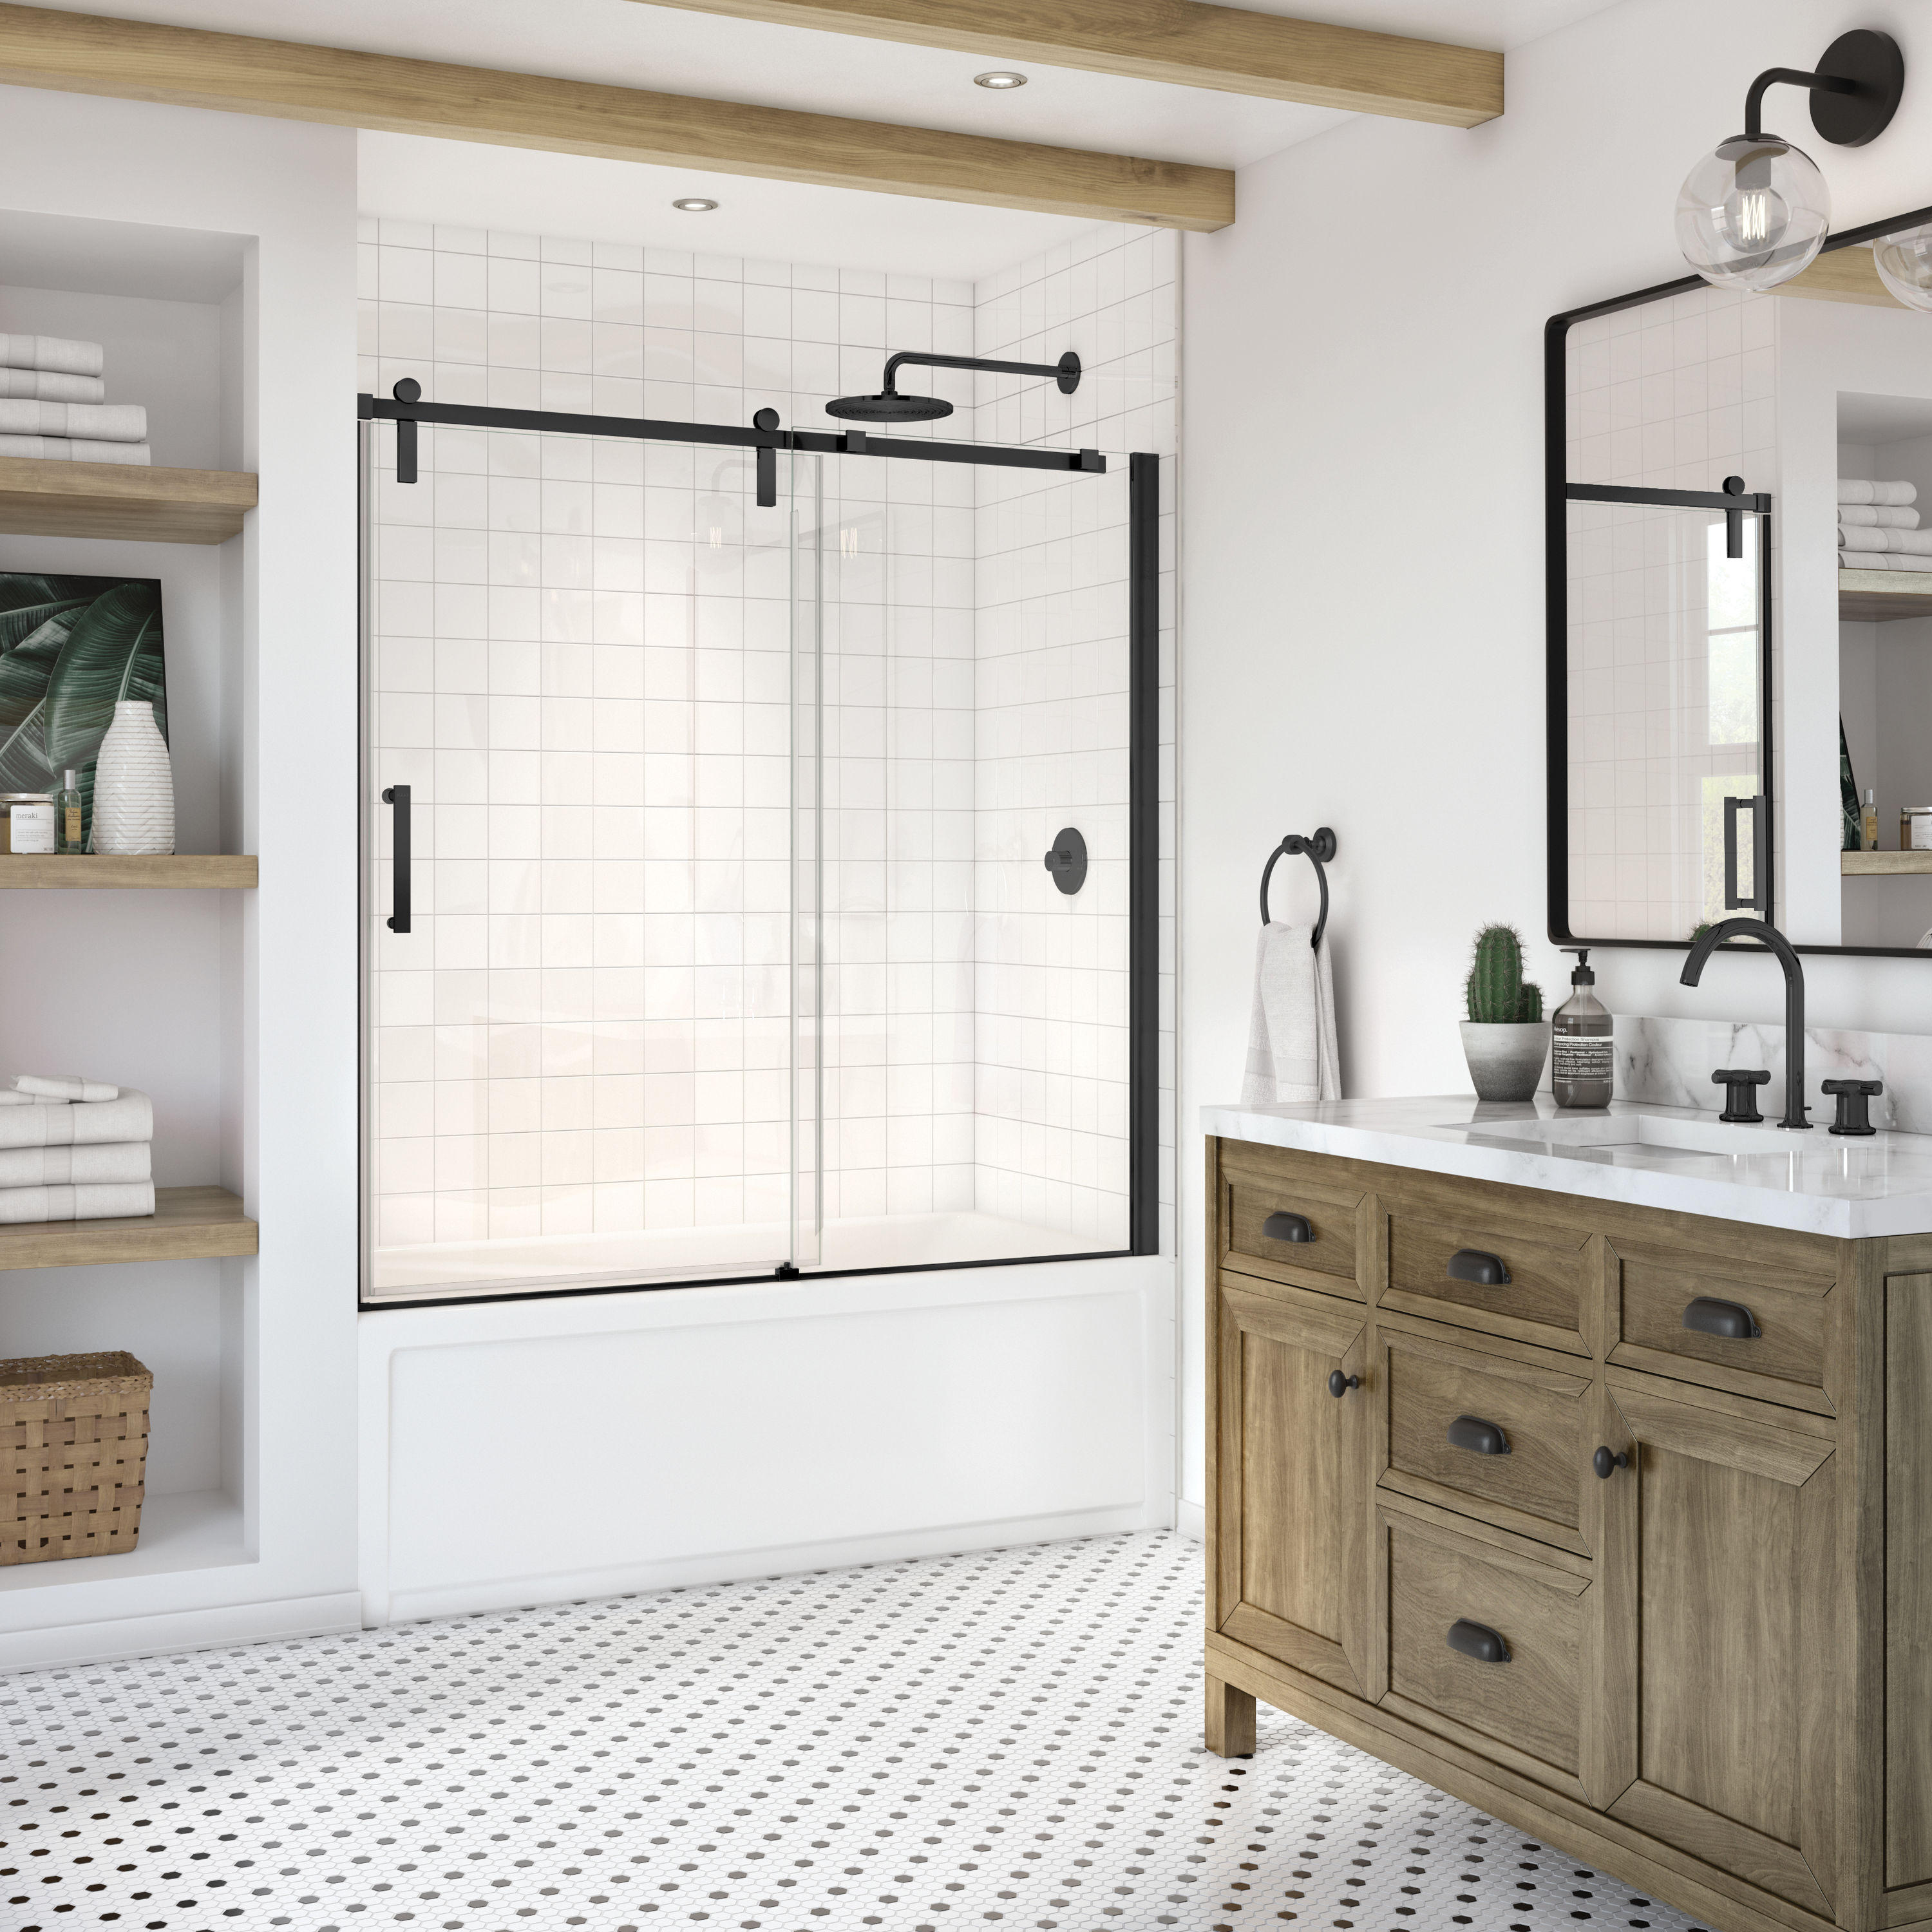 8 Matte Black Ceramic Corner Shelf Elegant Shower Shelf with a Drain -  Marble Barn